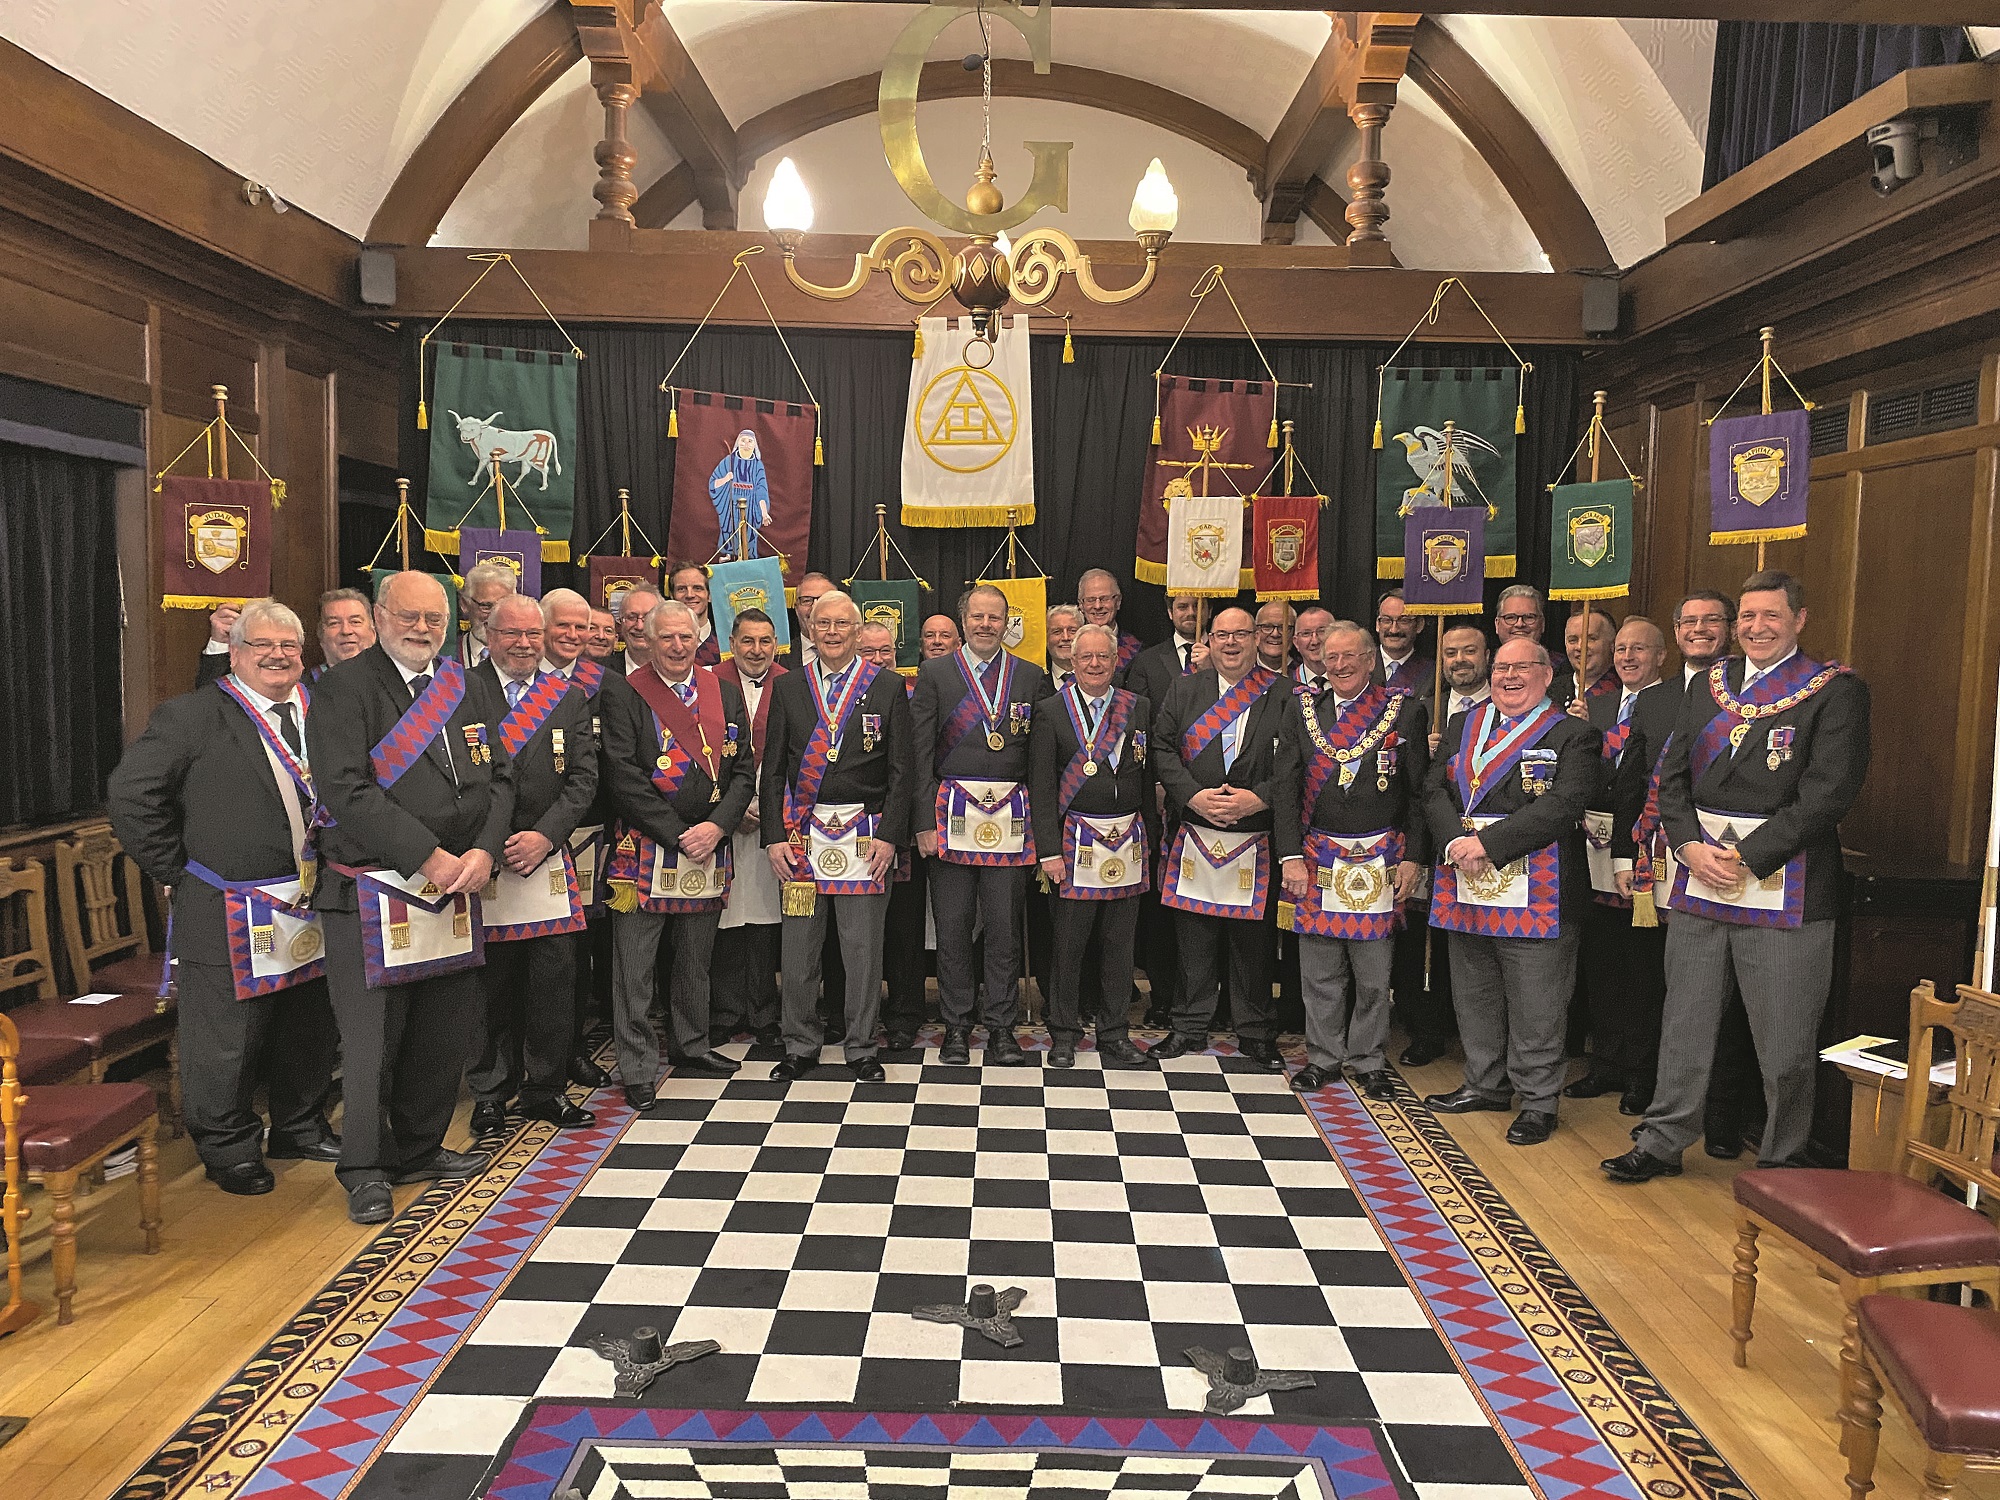 Cambridge Freemasons in a Lodge room